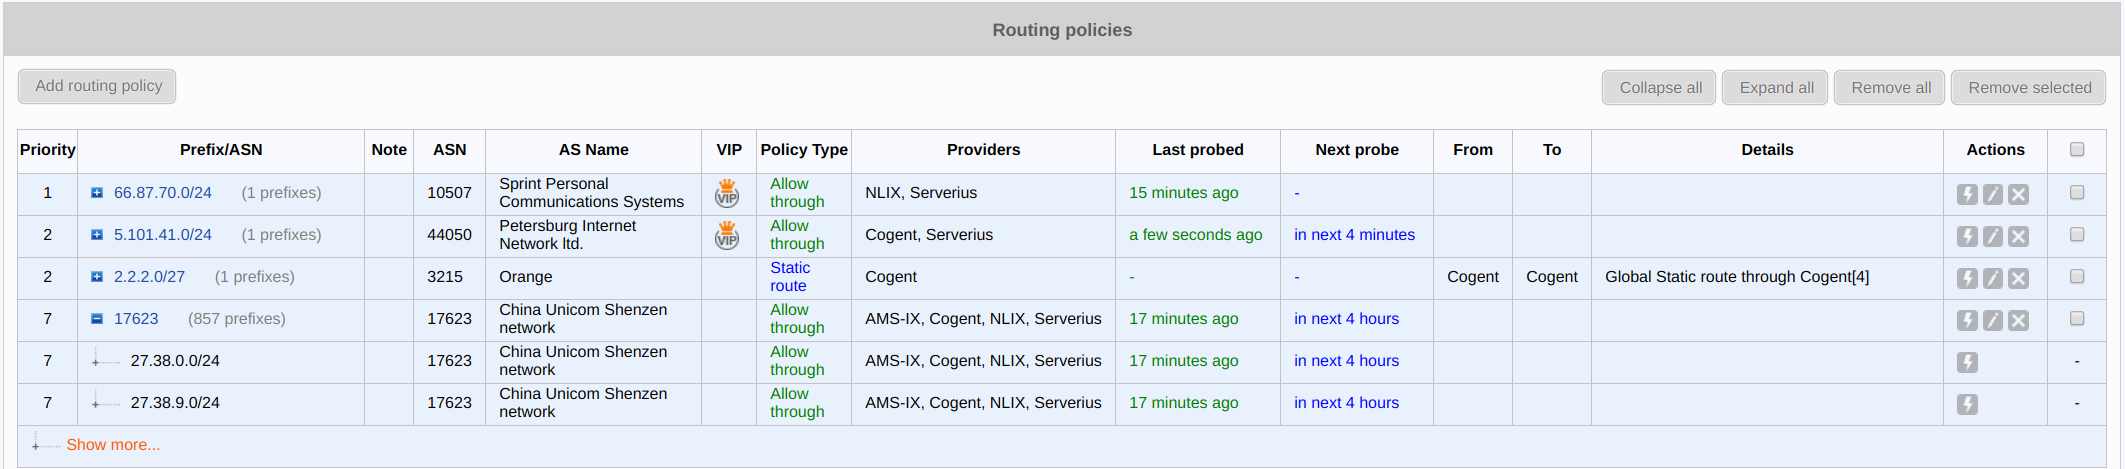 figure screenshots/routing-policies.png